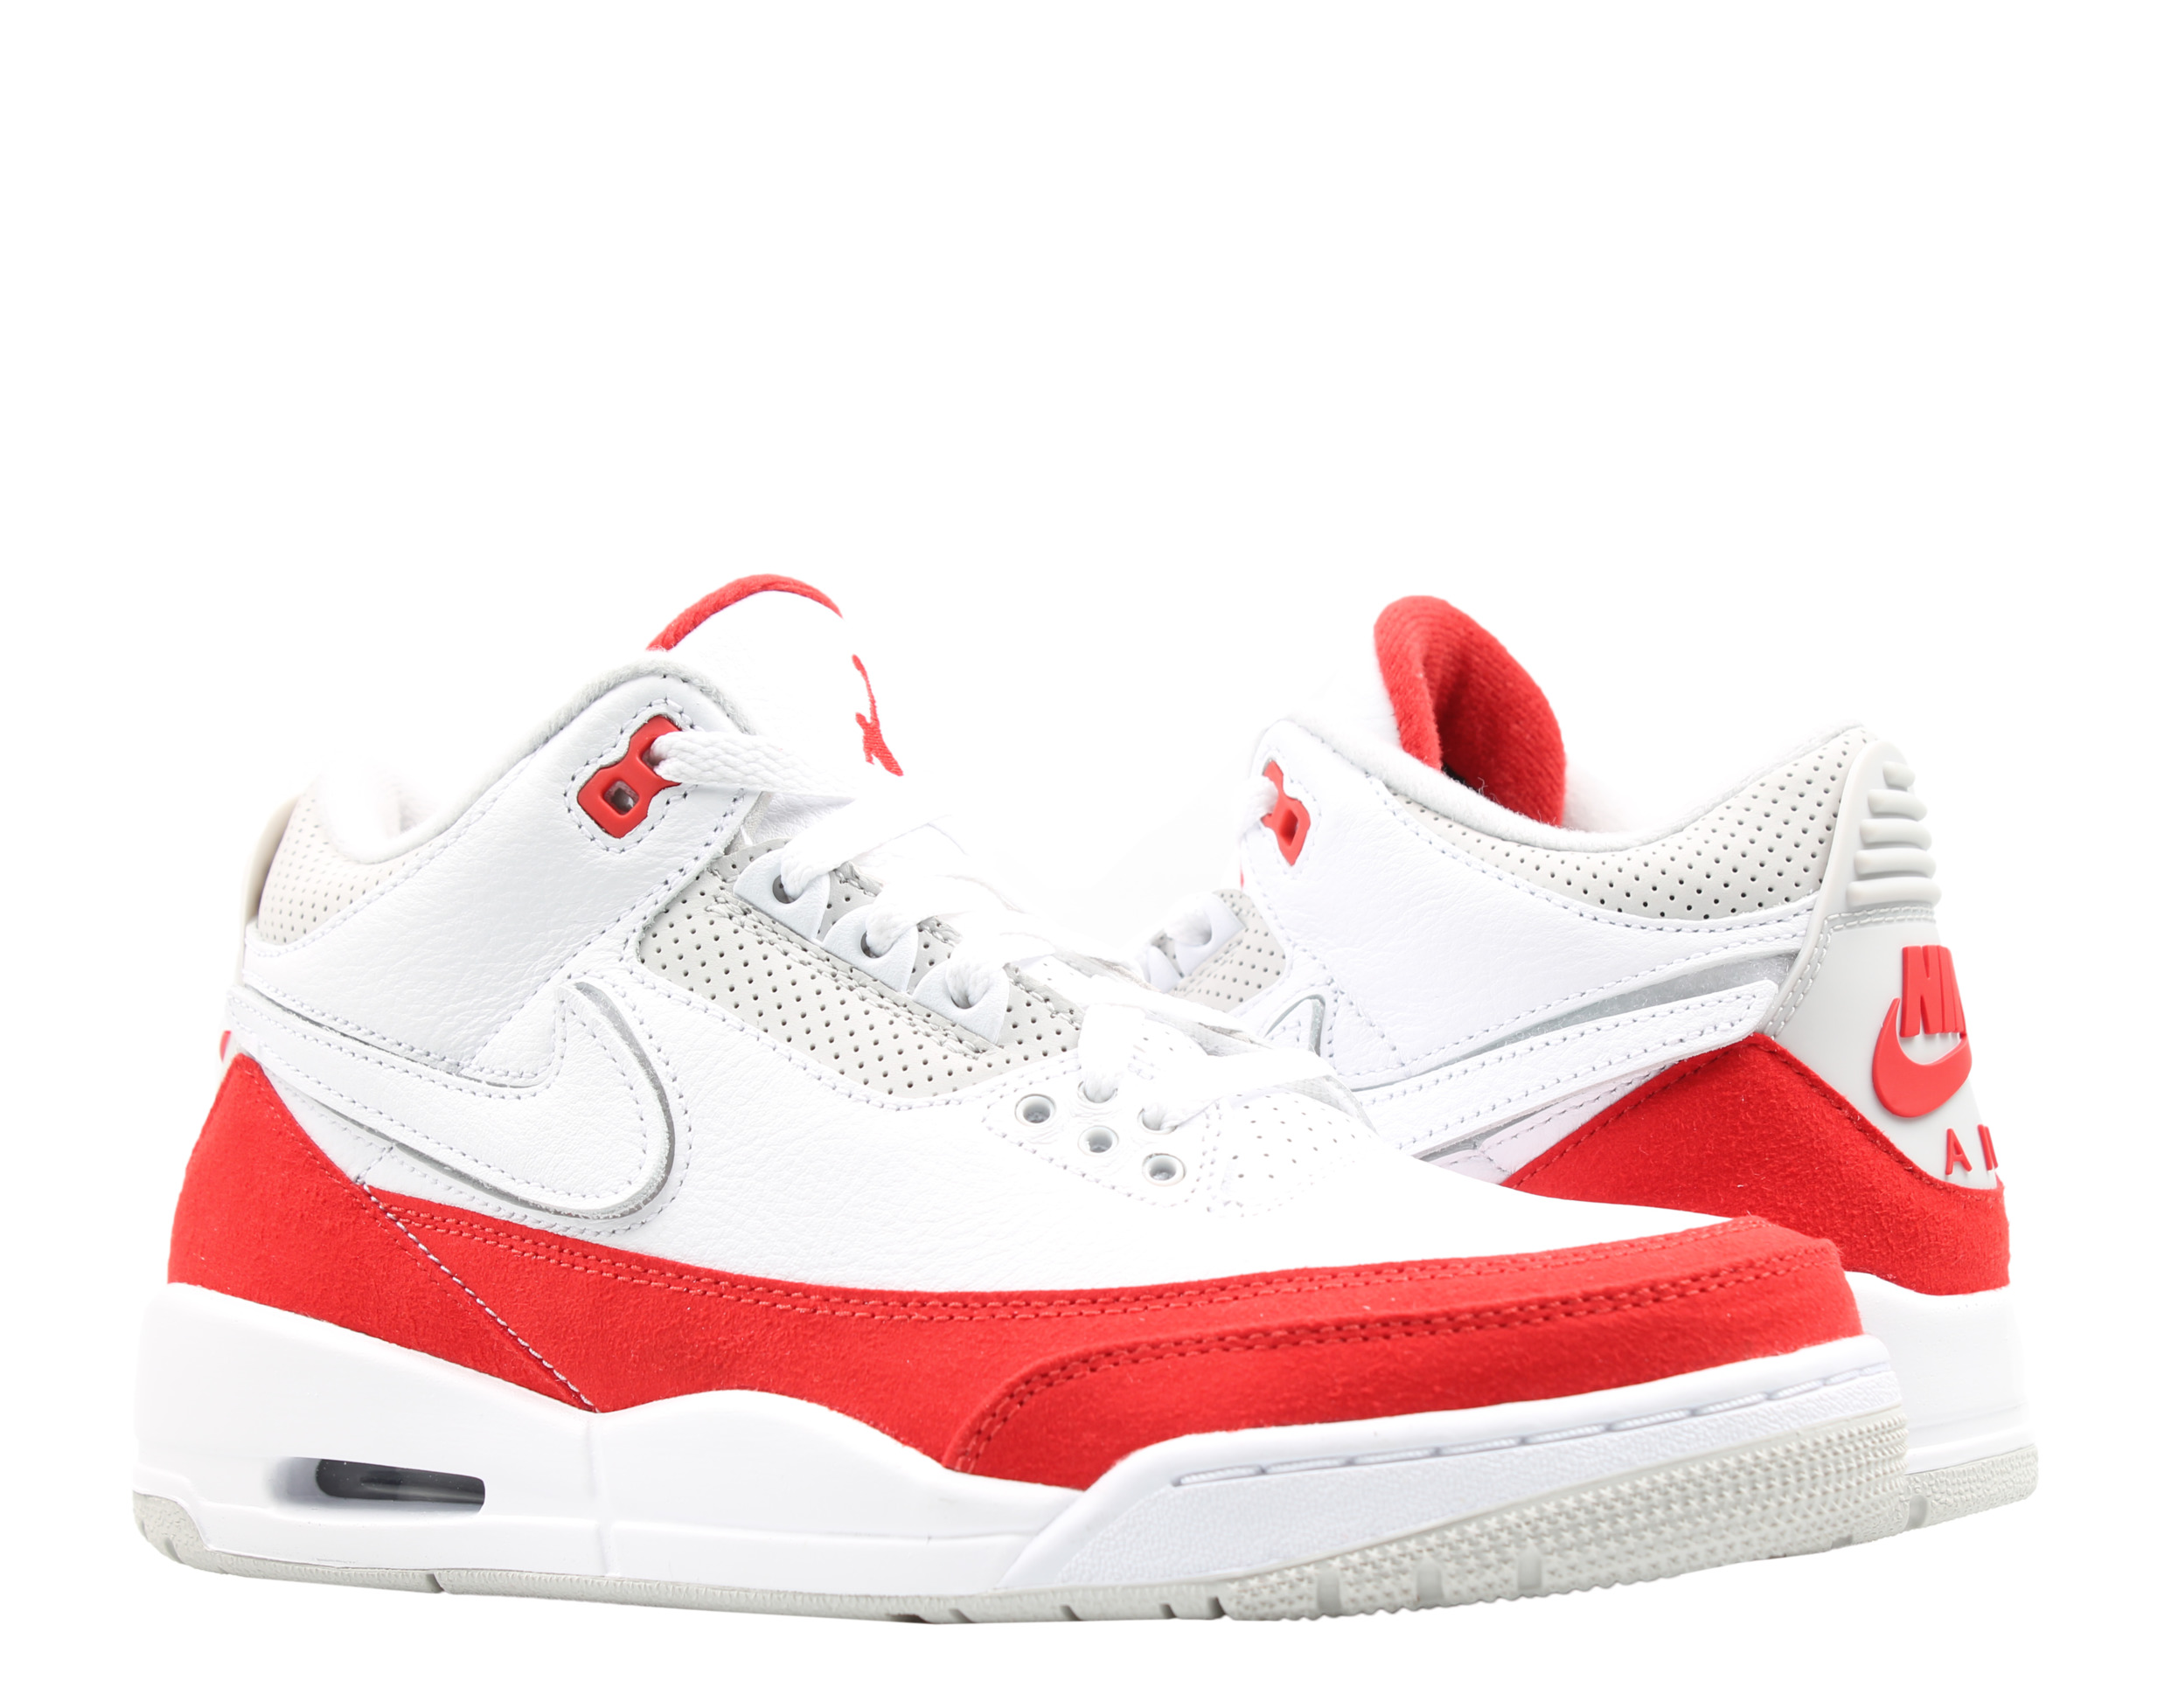 Nike Air Jordan 3 Retro TH SP Men's Basketball Shoes Size 9.5 - image 1 of 6